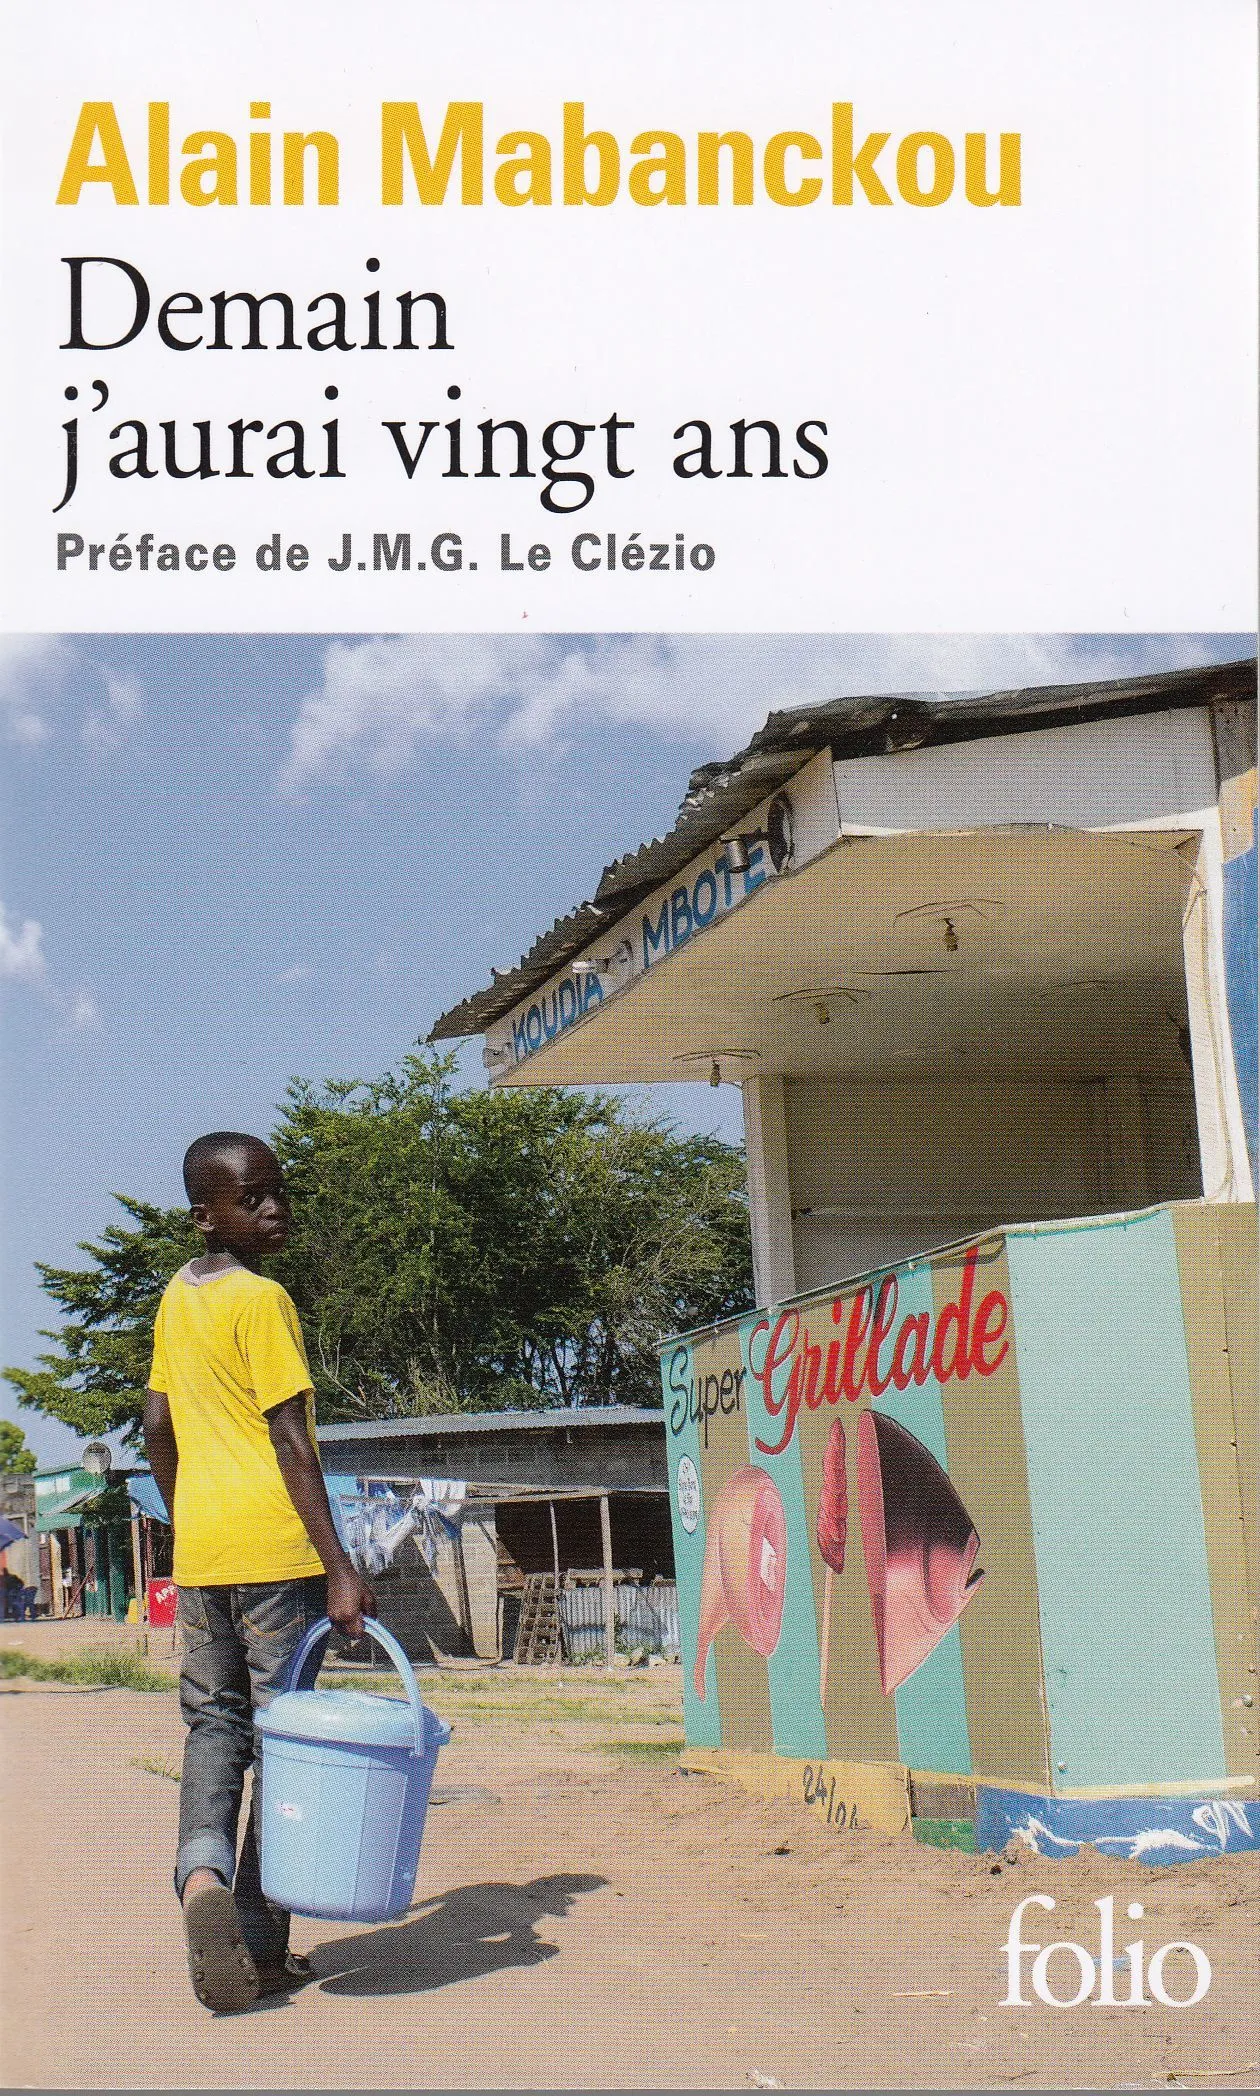 Alain Mabanckou, Demain j'aurai vingt ans, 2010, Gallimard.